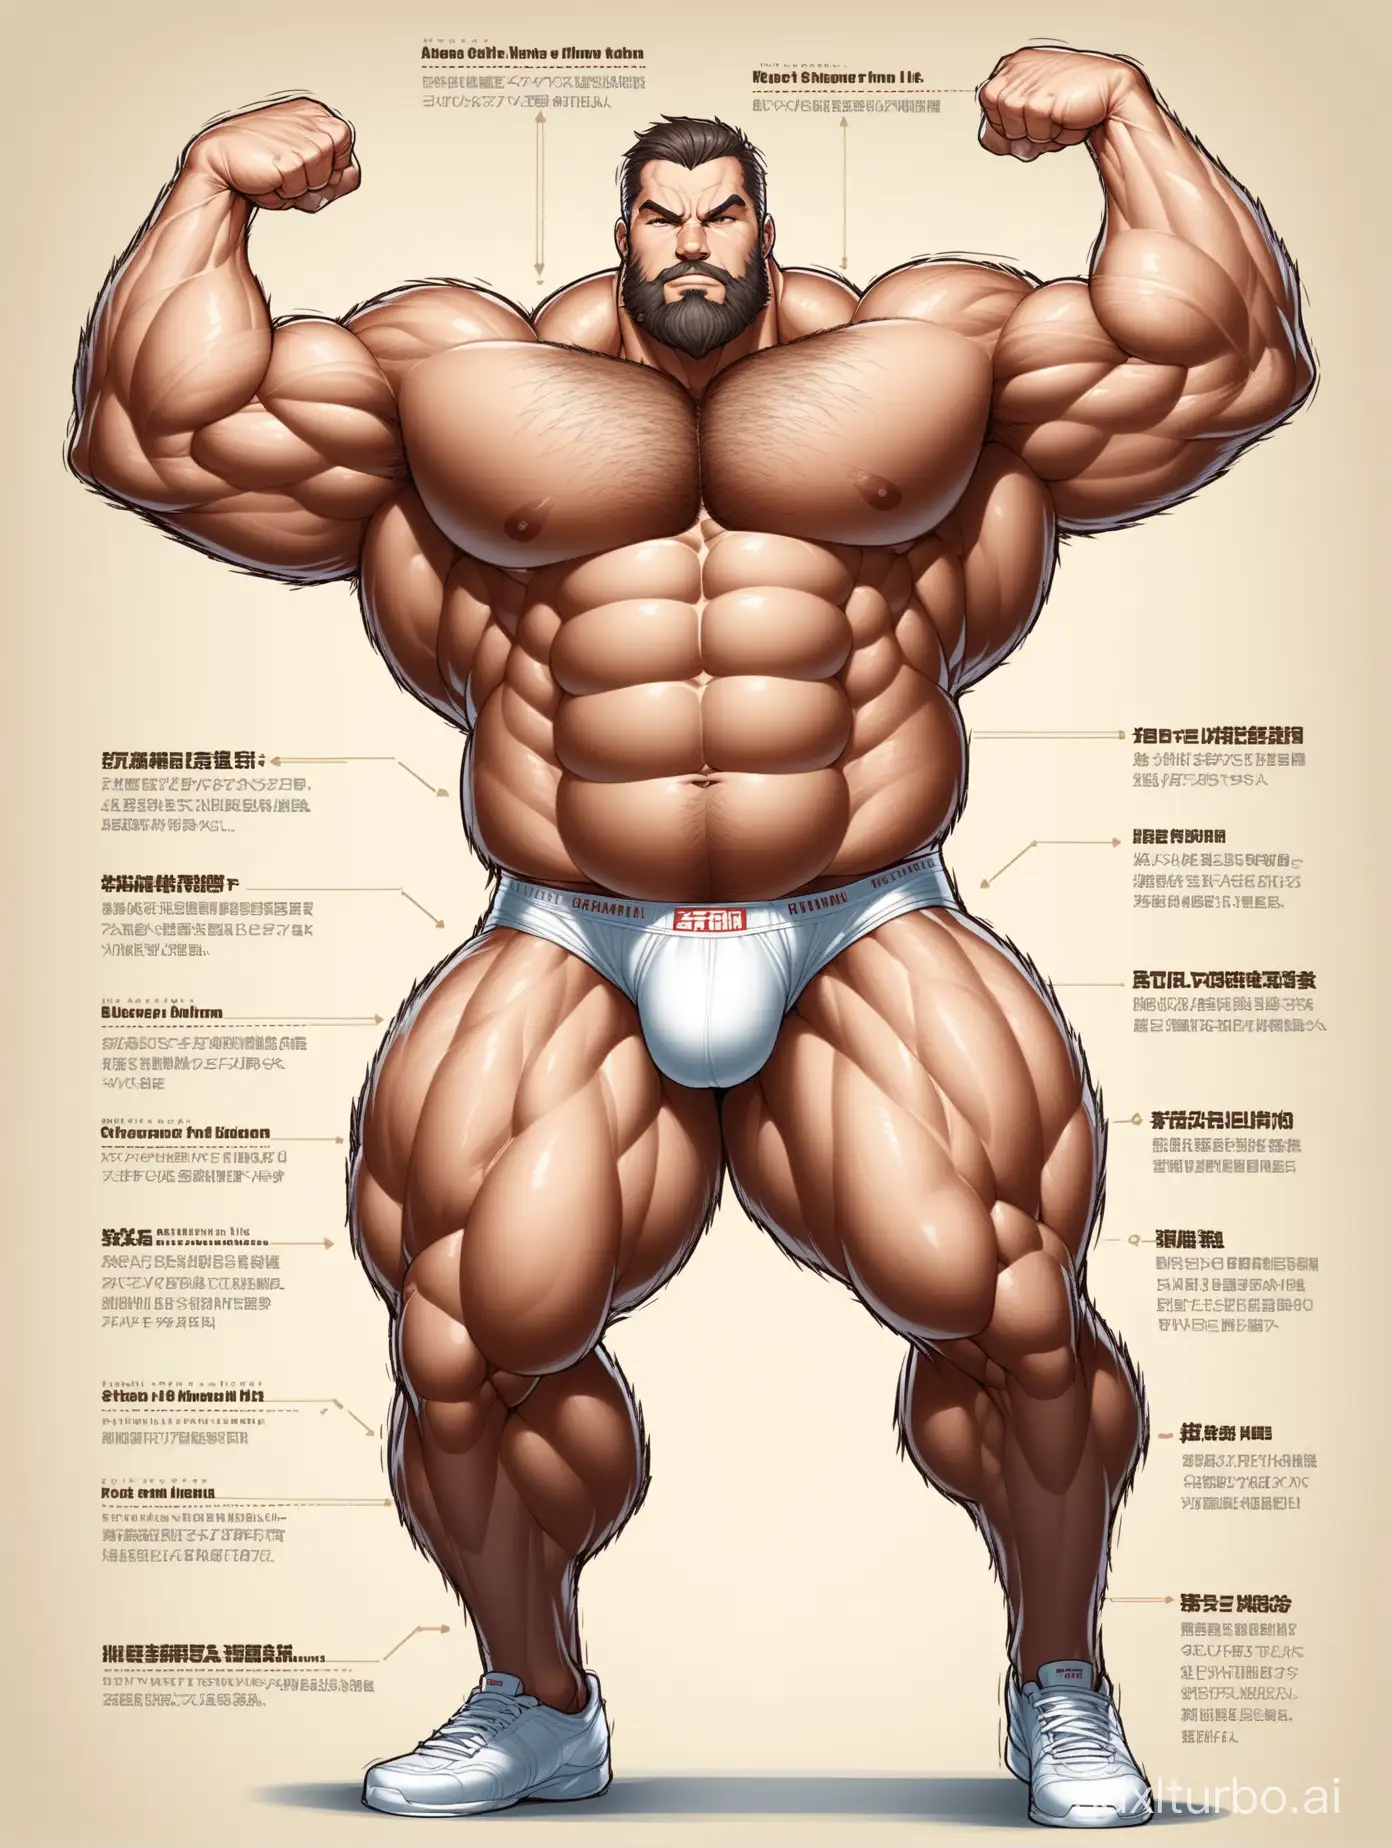 Massive-Muscle-Stud-Showing-Off-Biceps-in-Underwear